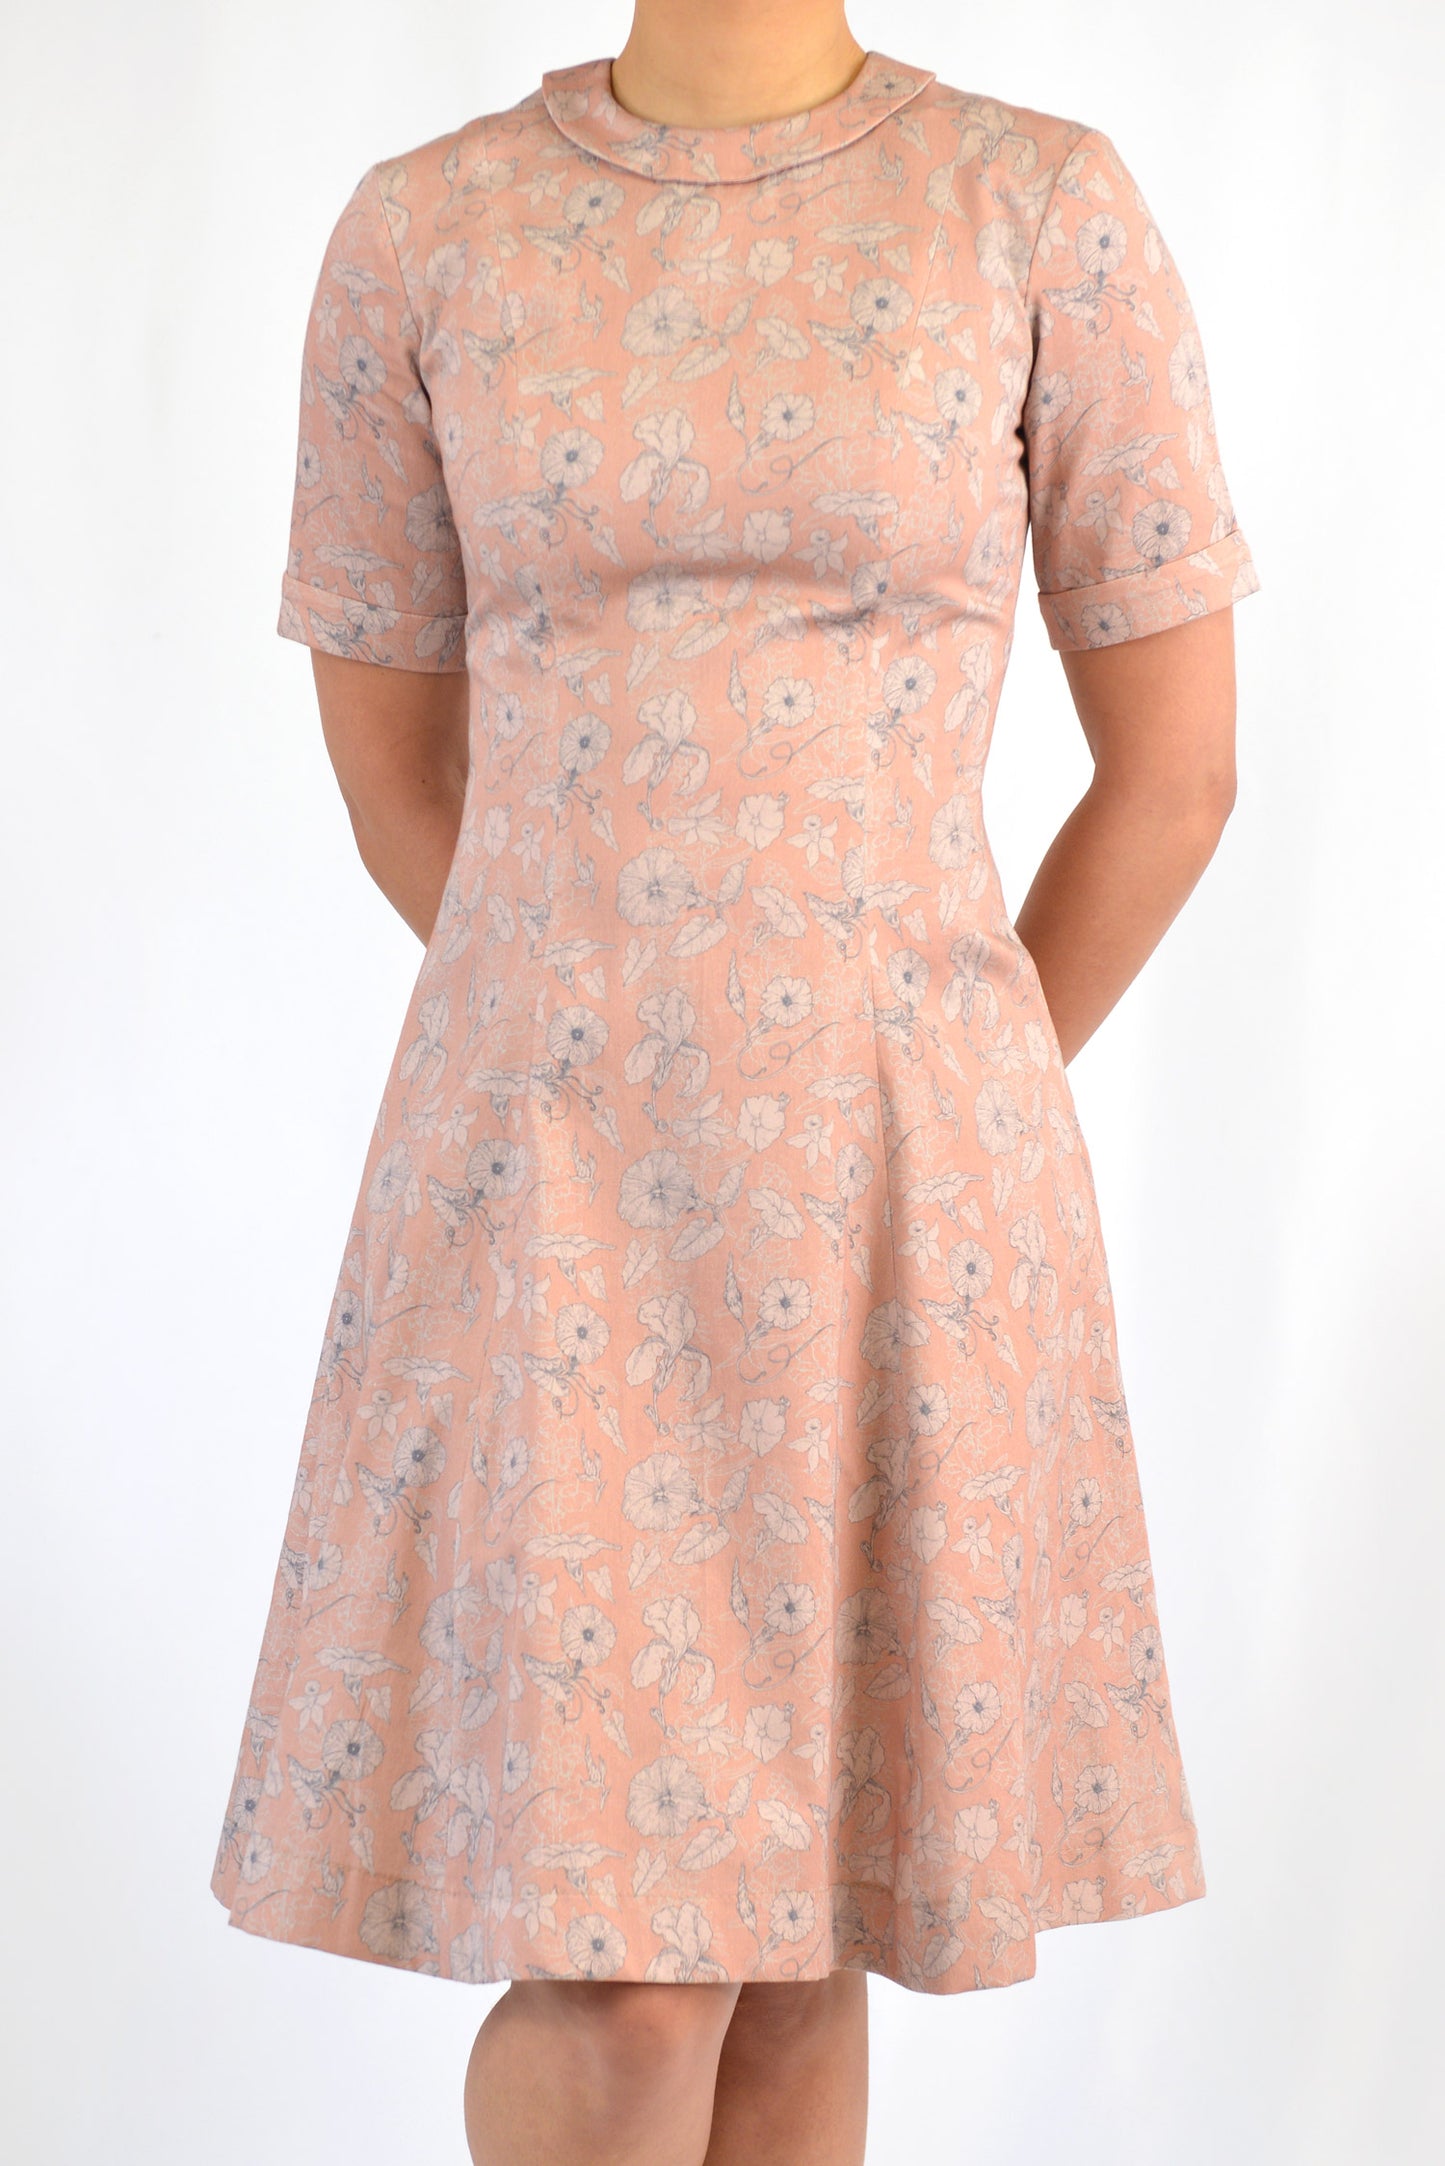 Peach dress with little round collar (#26-4)